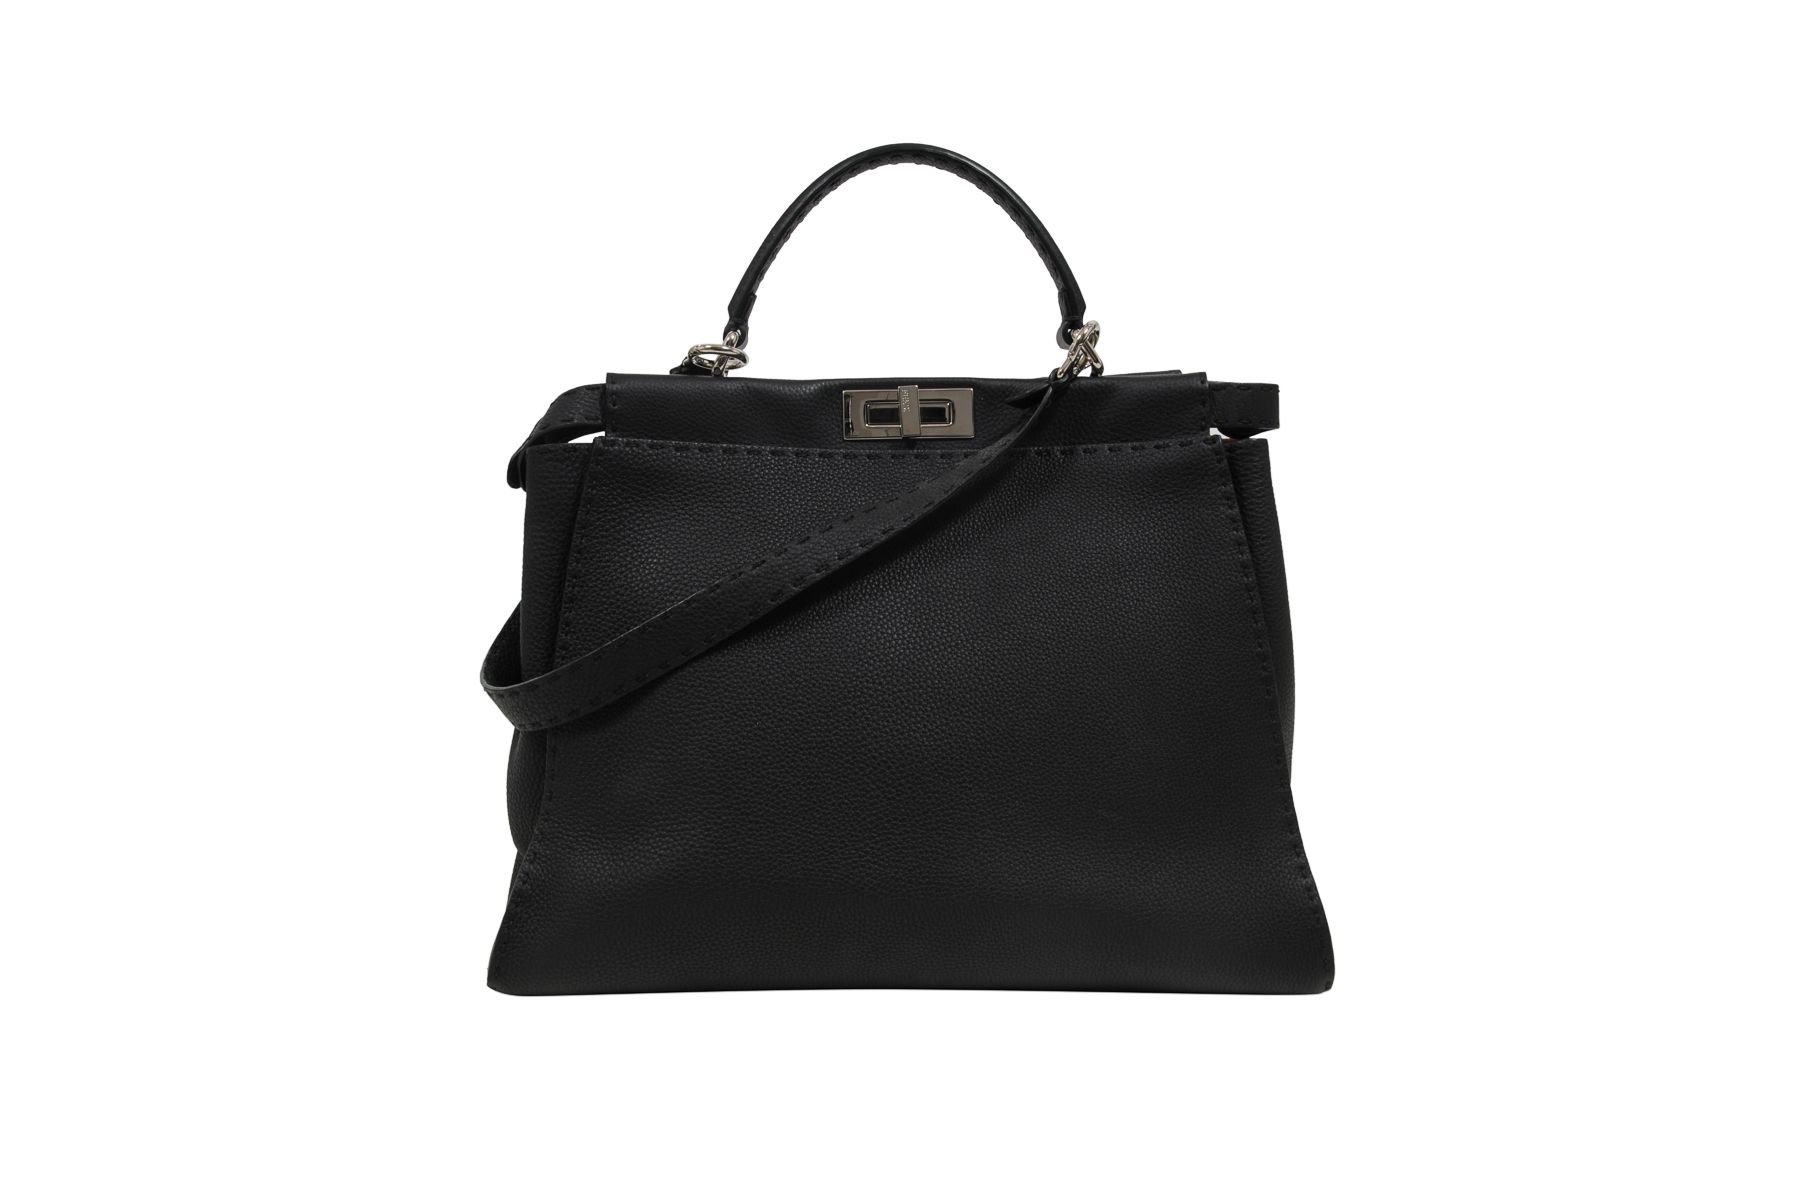 Fendi Peekaboo Satchel Tote Large Black Leather Shoulder Bag Size ONE SIZE - 1 Preview